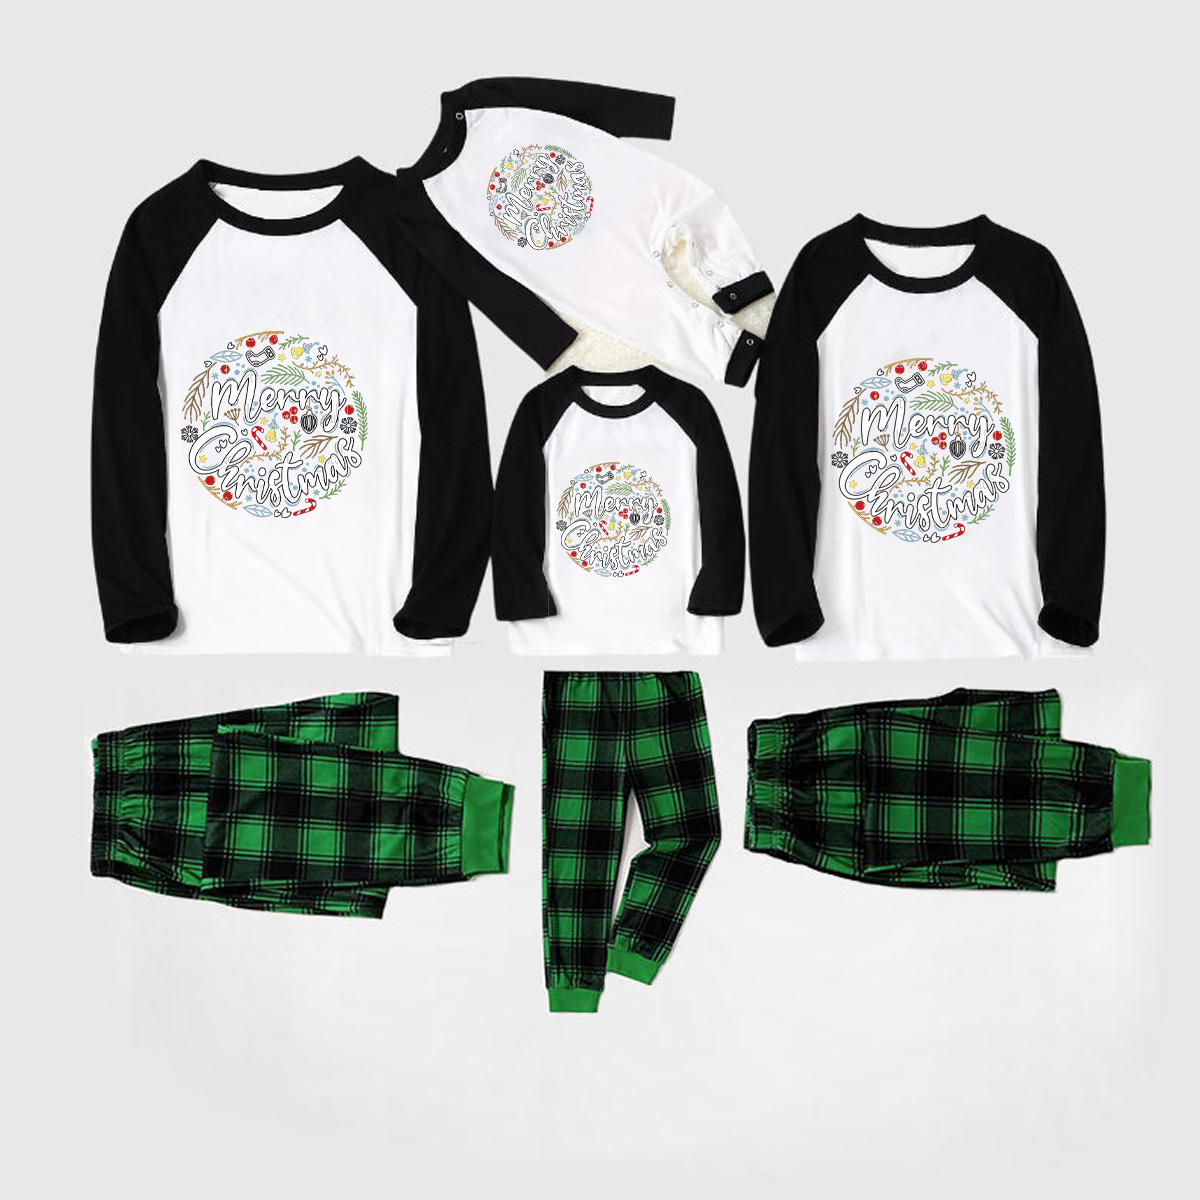 Family Look Pajamas Christmas pajamas, "Merry Christmas" letter print, patchwork top and green plaid pants